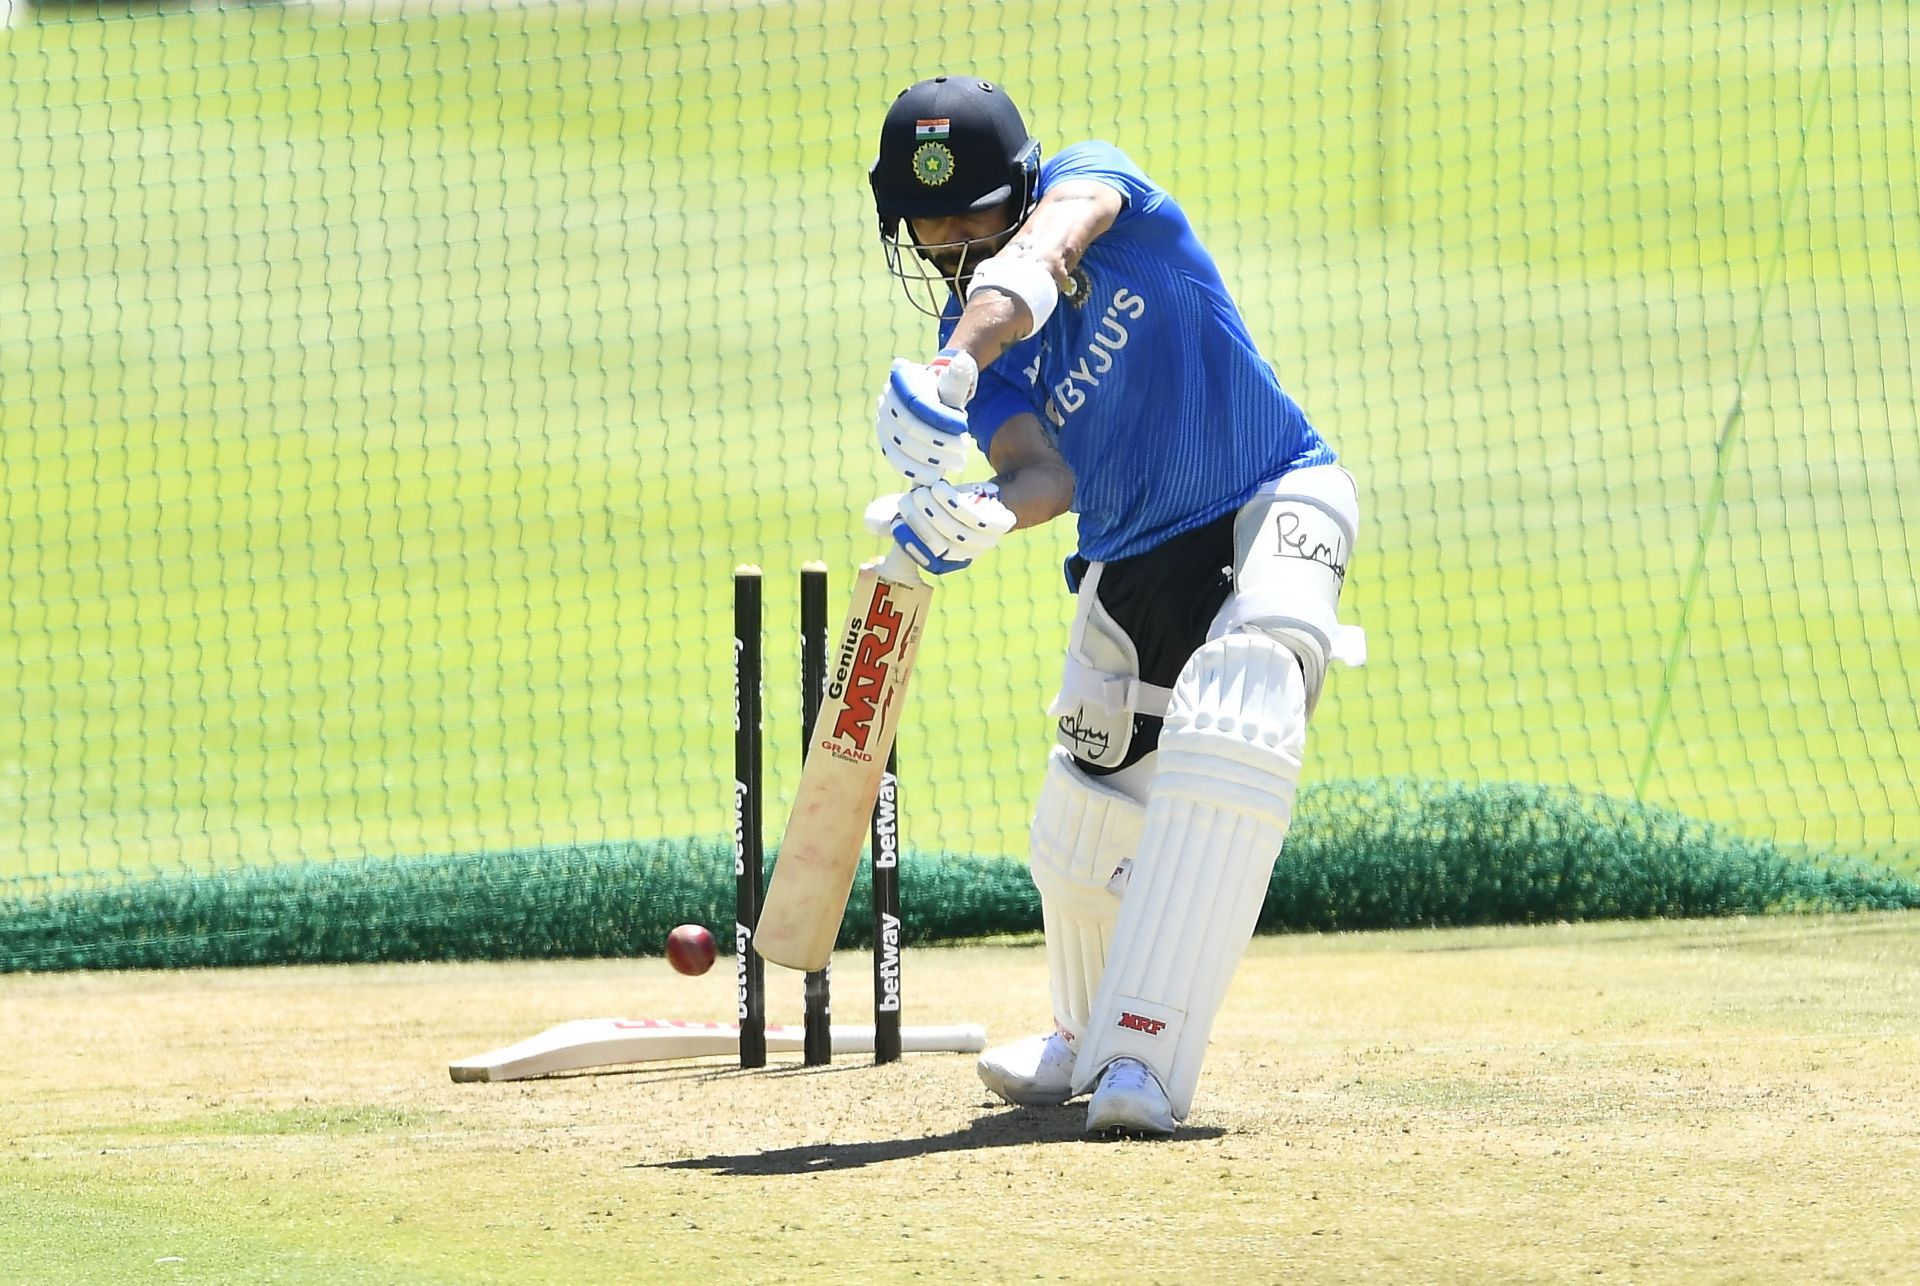 Kohli has only scored 26 runs in the ODI series so far